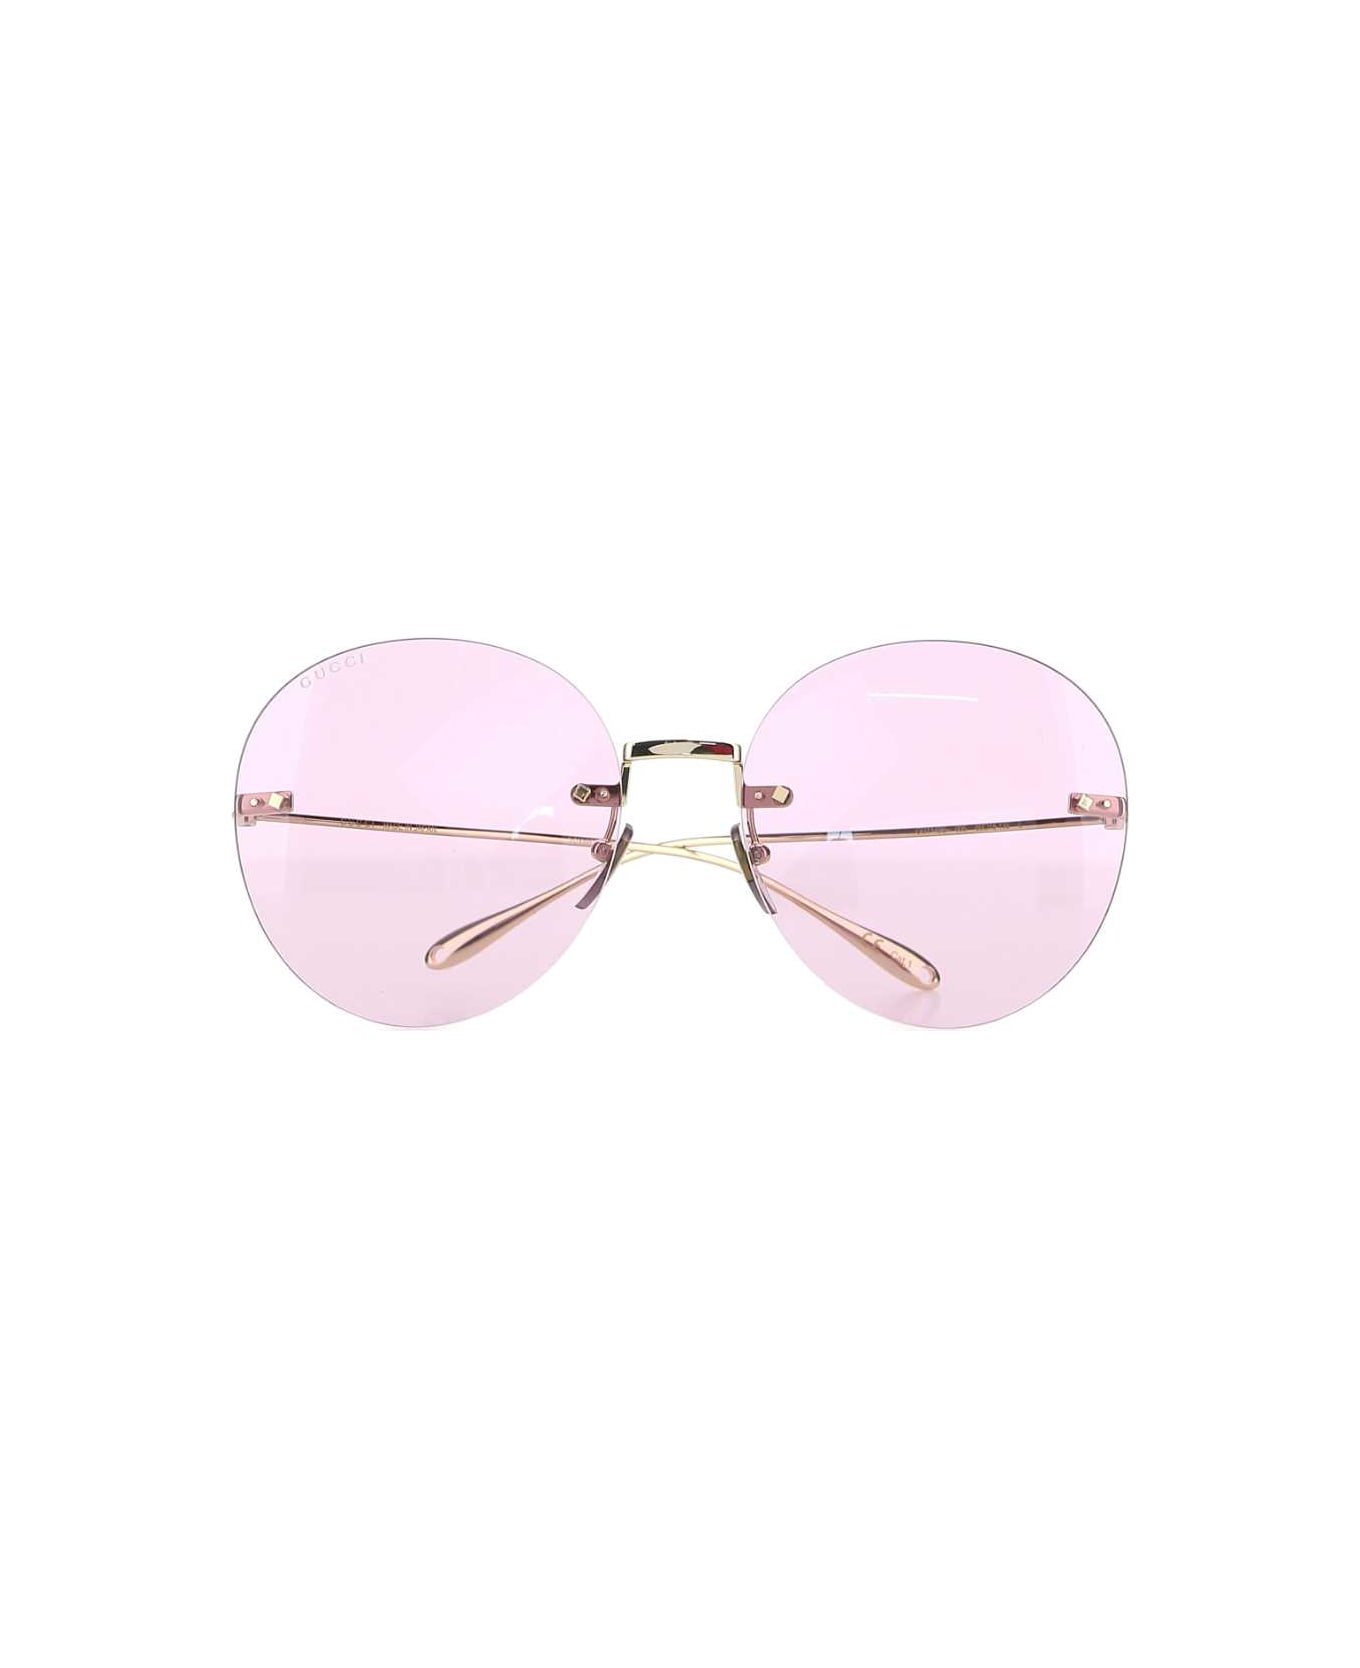 Gucci Gold Metal Sunglasses - 8052